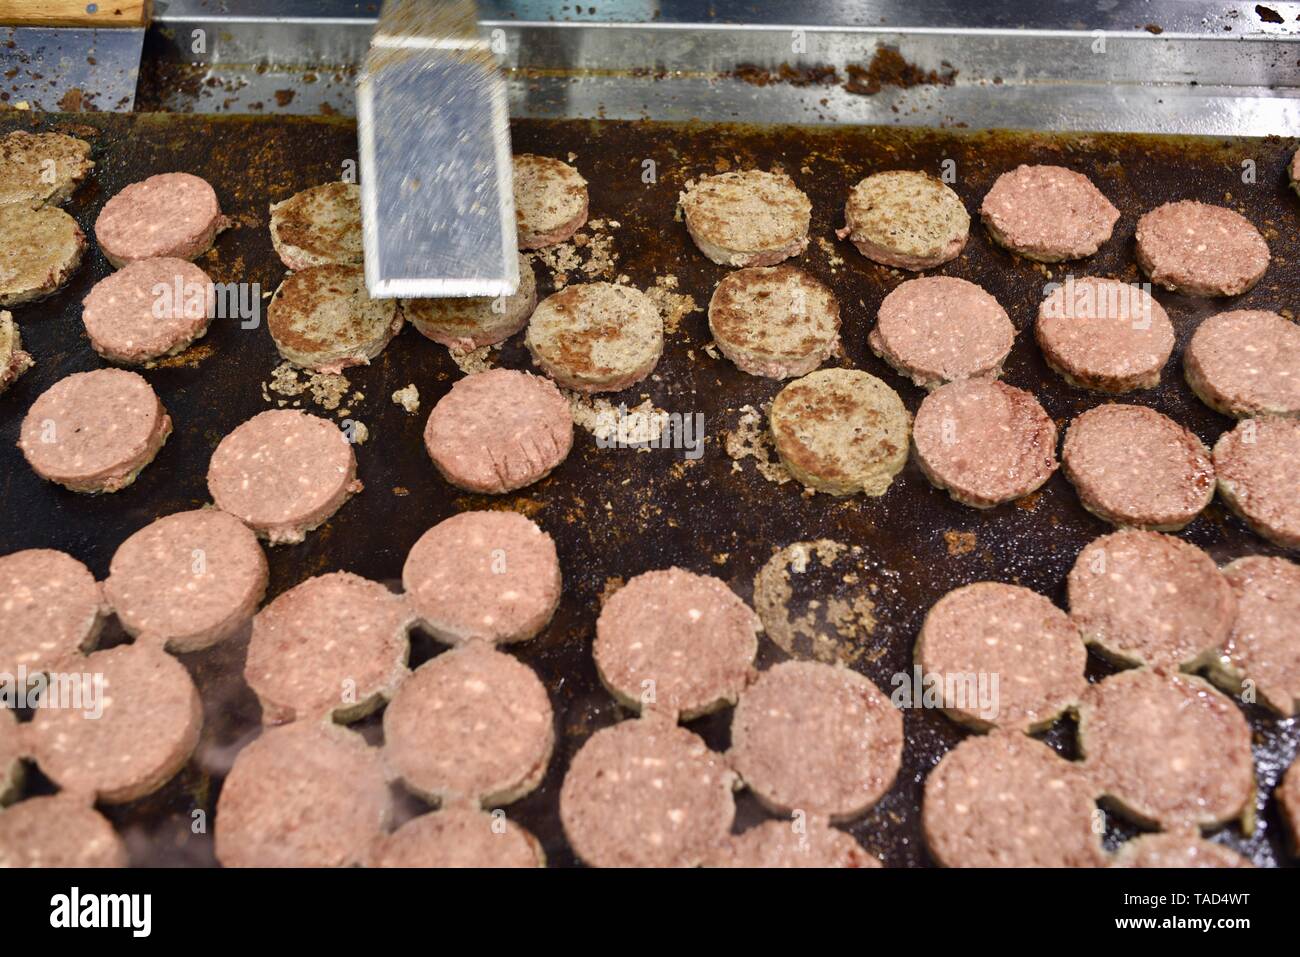 Sin carne Carne (gratis) imposible Burger de imposible alimentos. Cocinar vegetariano, vegano hamburguesa de base vegetal. National Restaurant Show, Chicago, EE.UU. Foto de stock